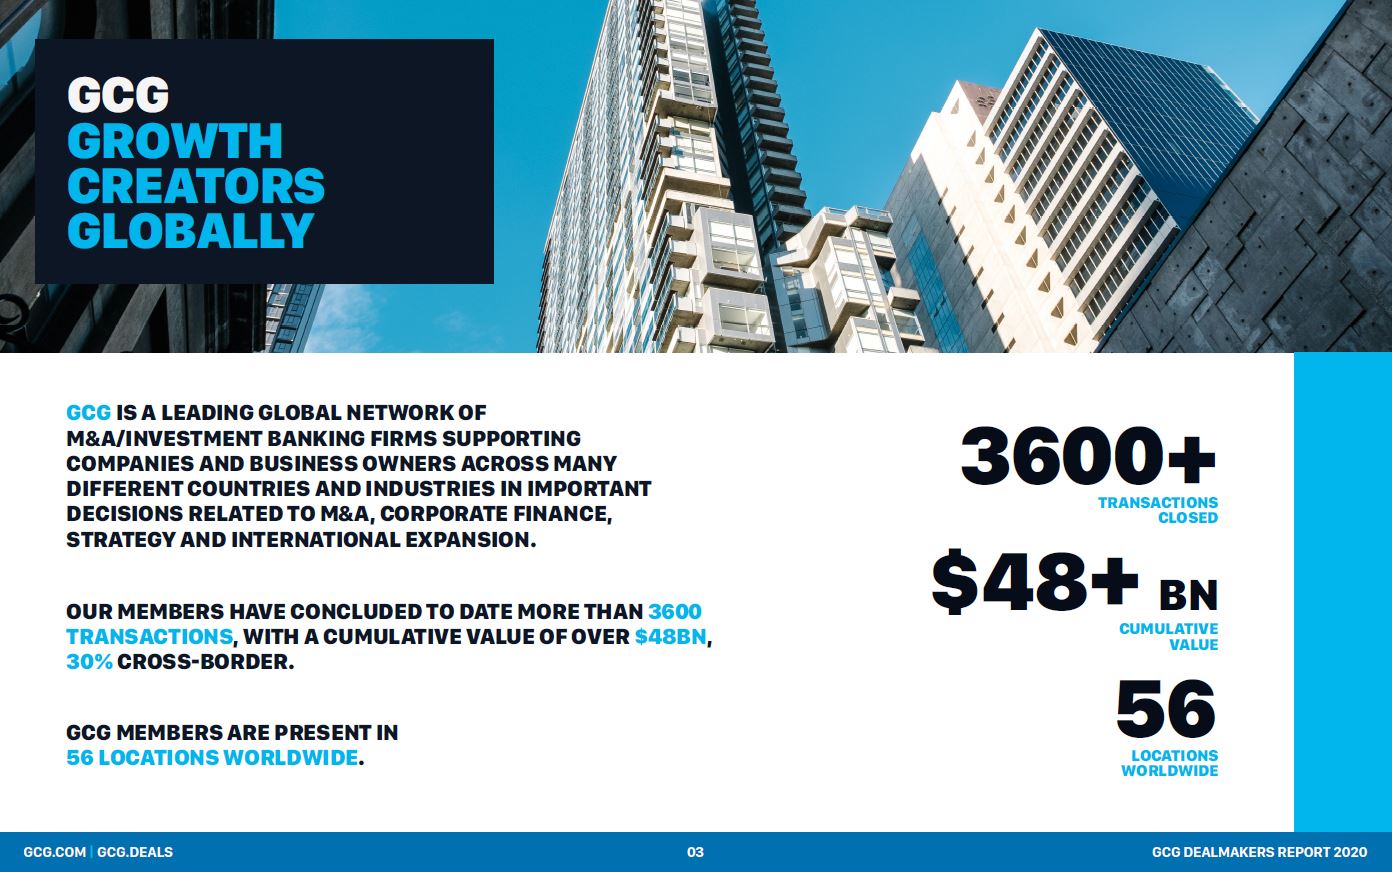 GCG Dealmakers Report 2020 | GCG - Geneva Capital Group